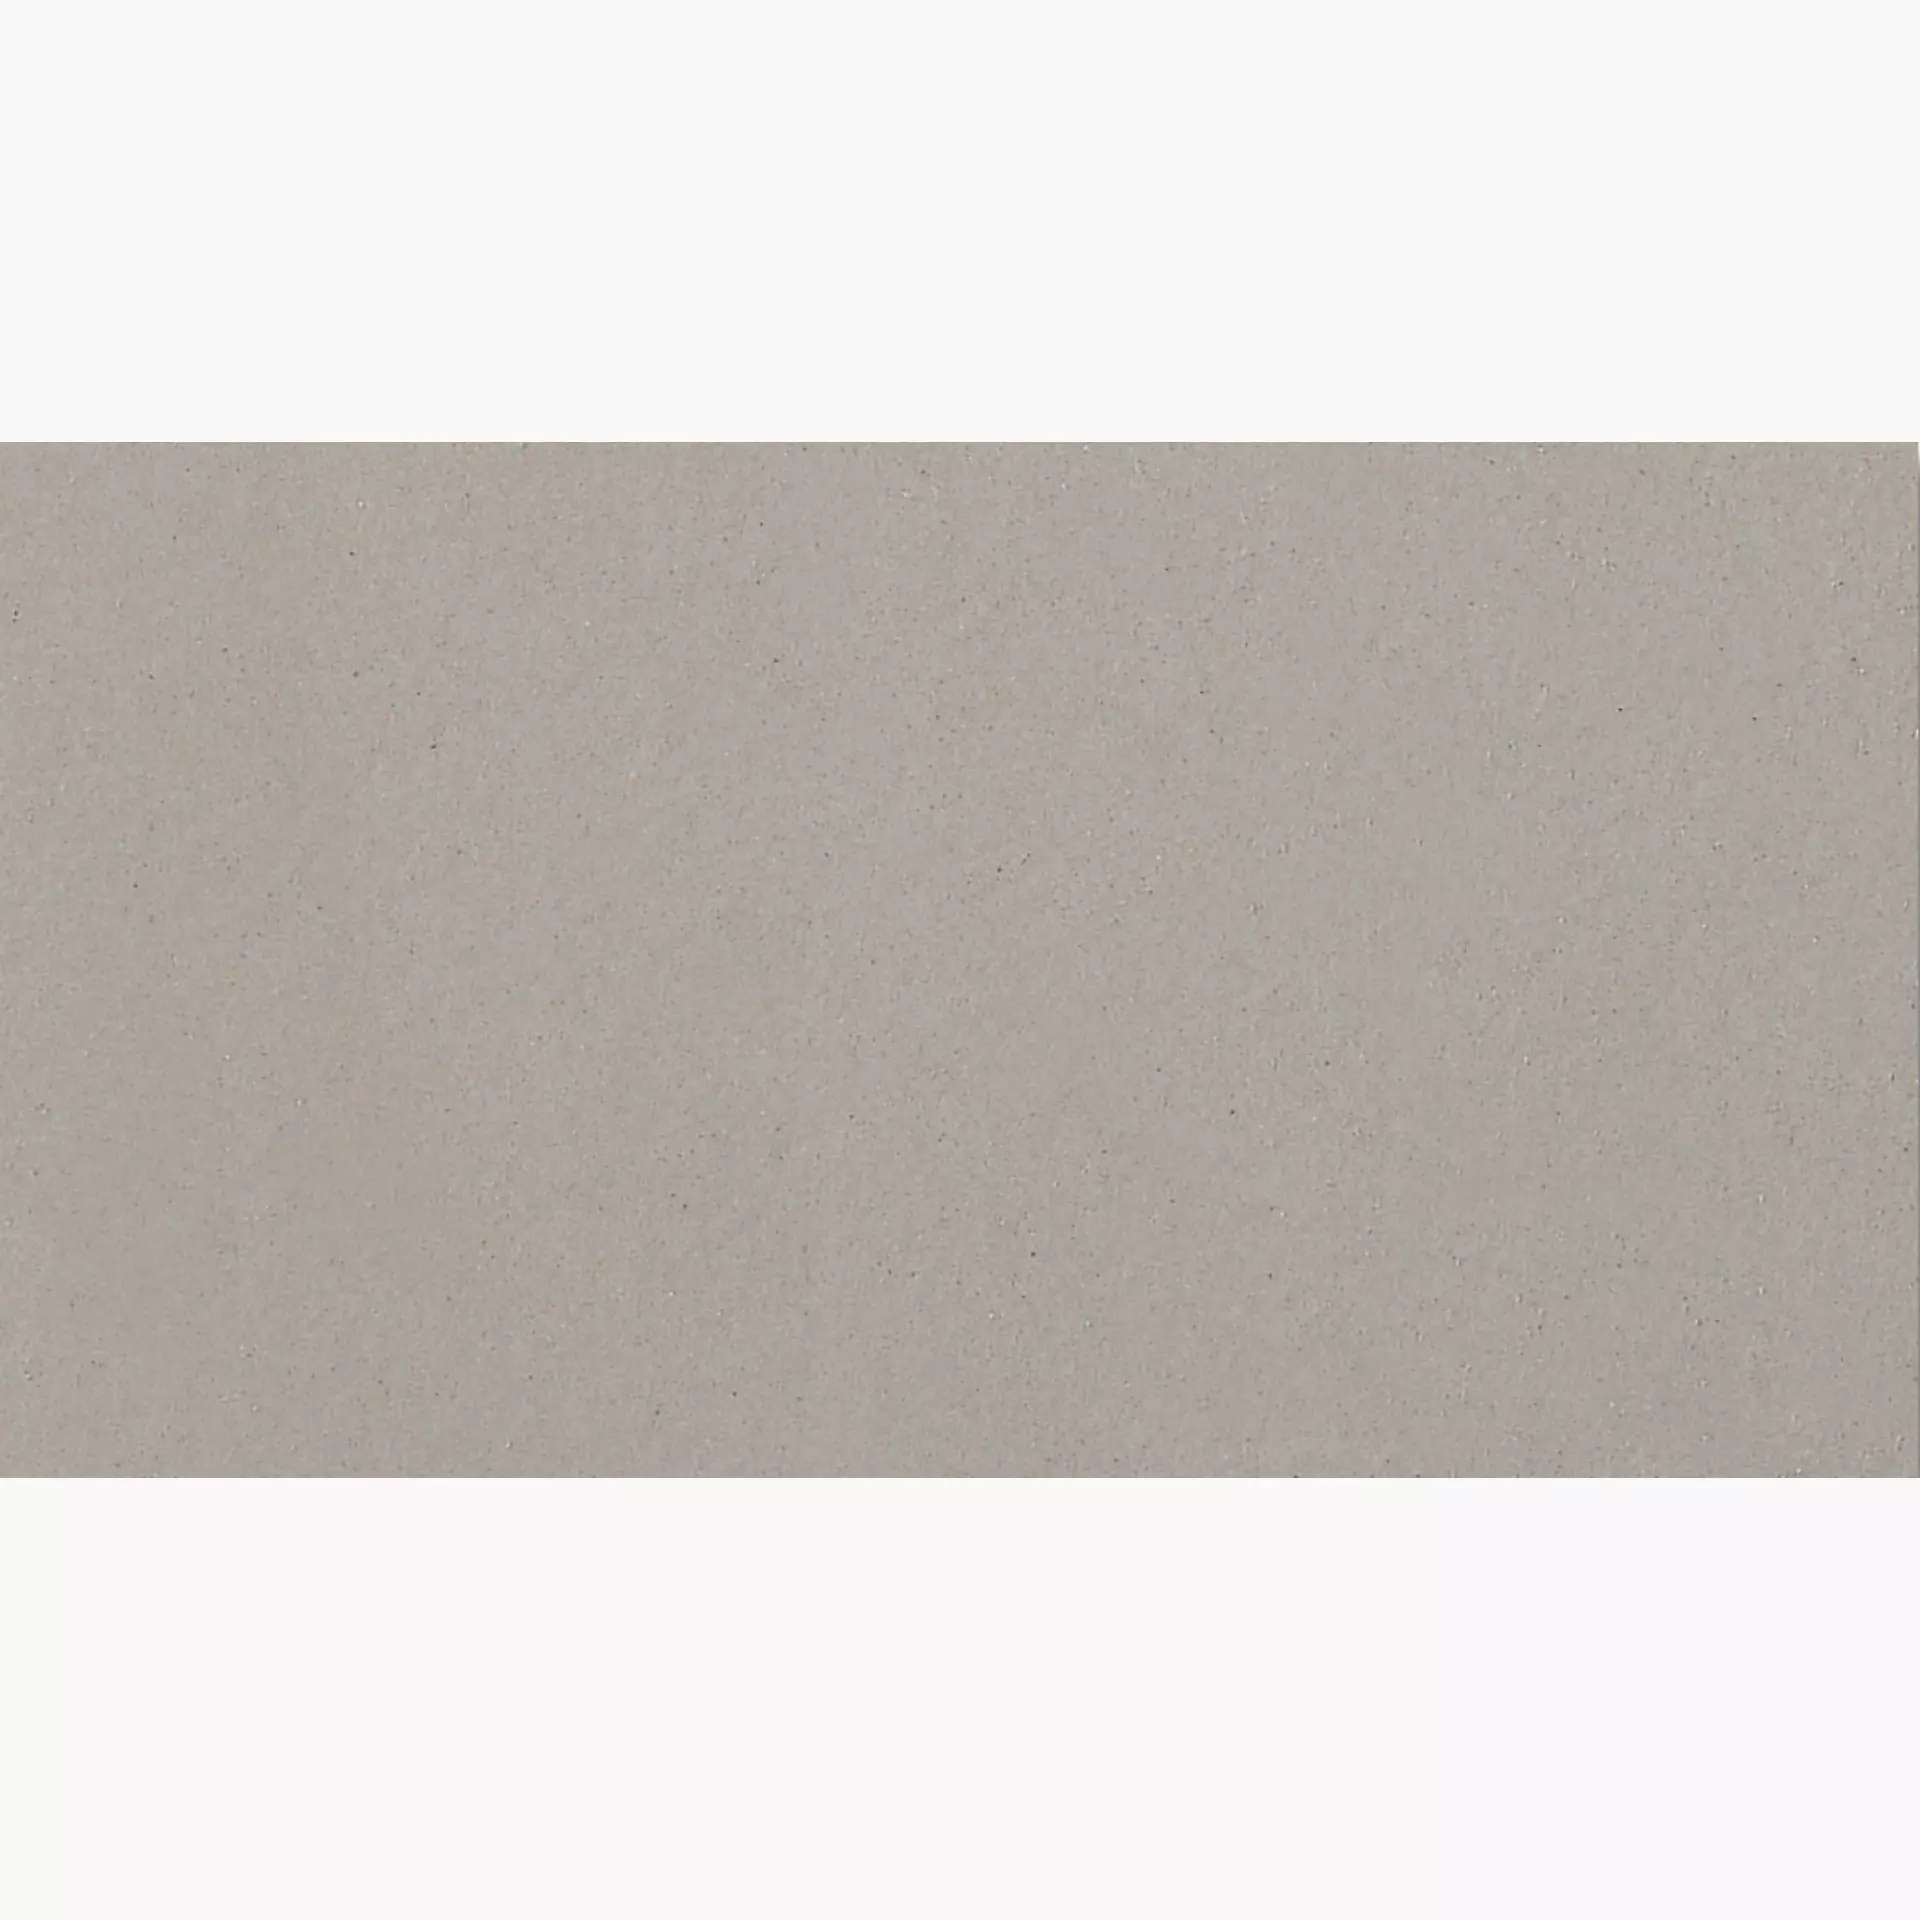 Coem Tinte Unite Grey Naturale TU3603R 30x60cm rectified 11mm